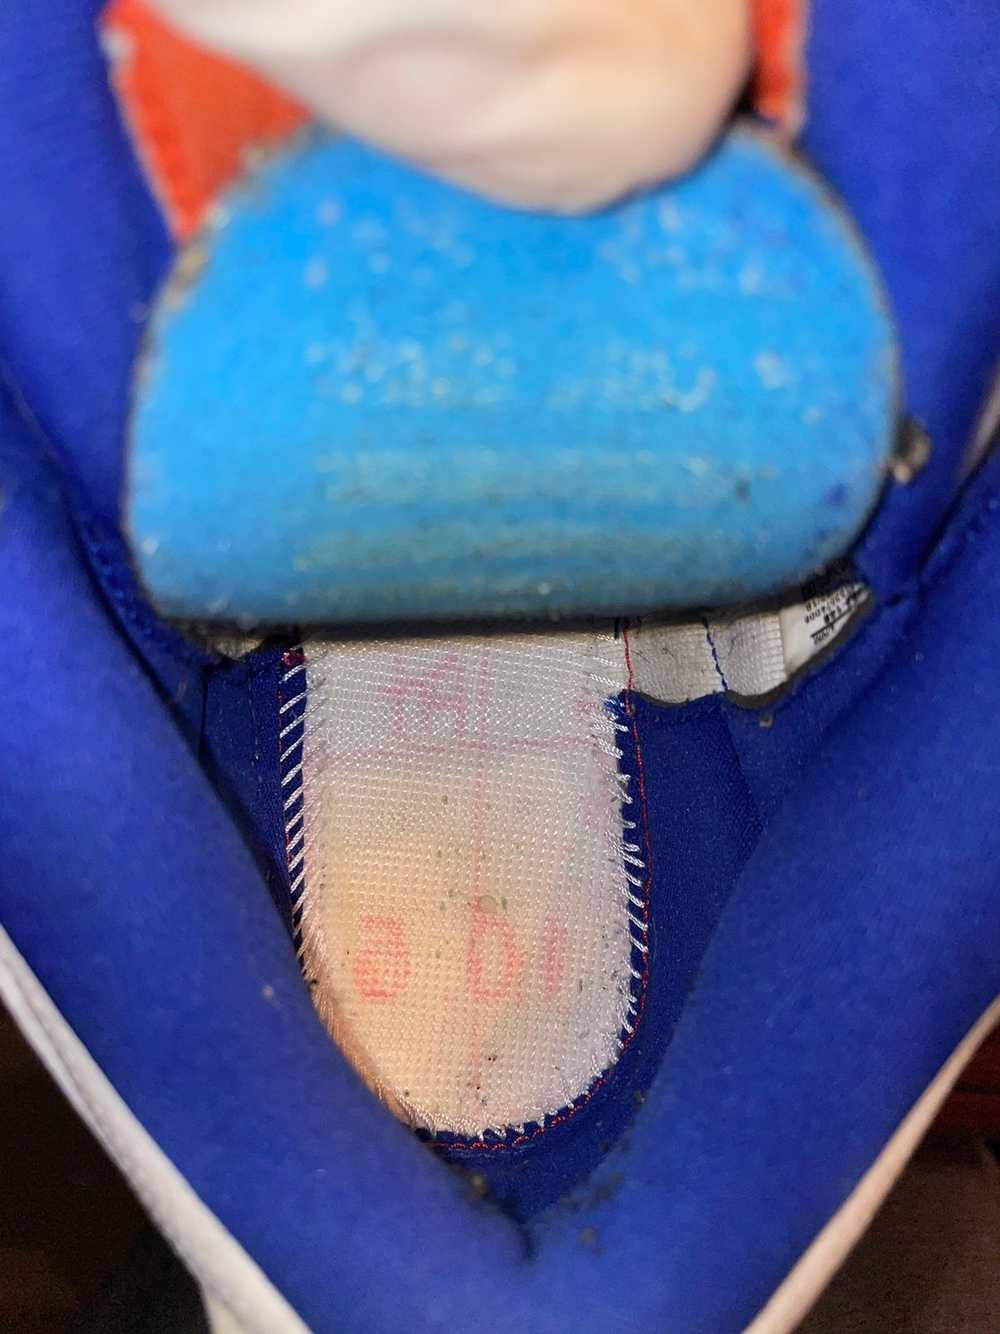 Jordan Brand × Nike Jordan 3 knicks - image 9